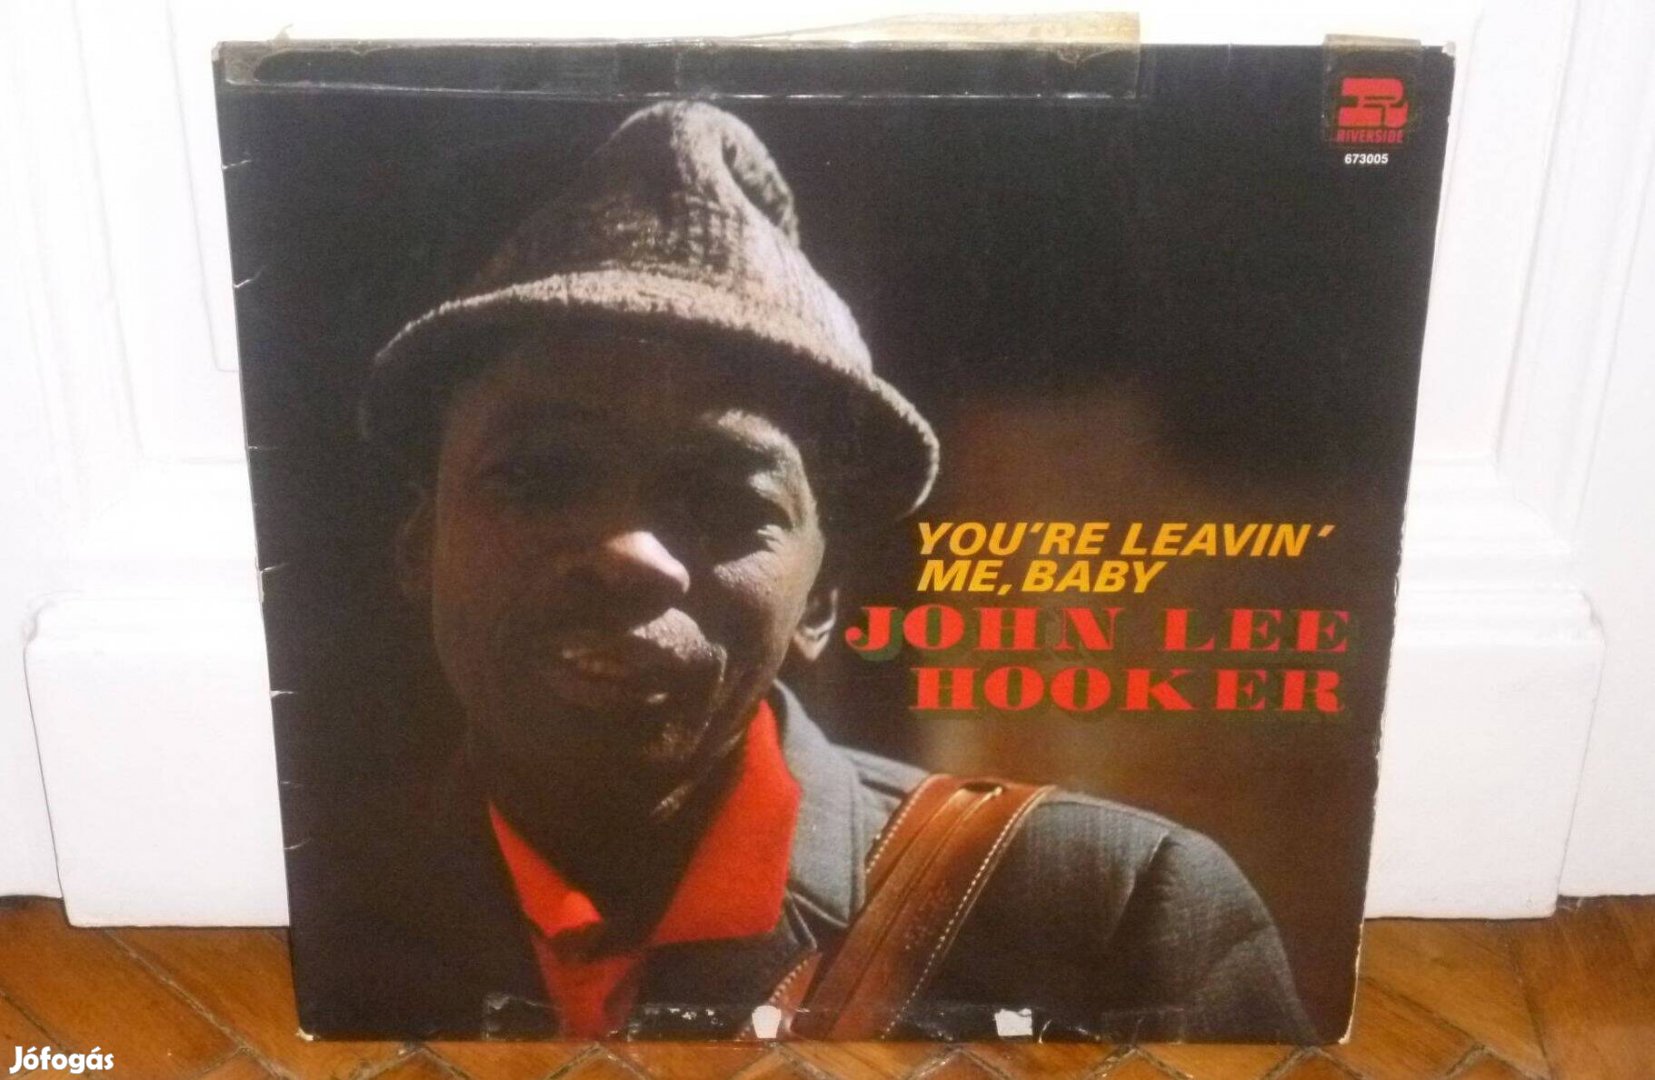 John Lee Hooker - You're Leavin' Me, Baby LP 1968 Germany